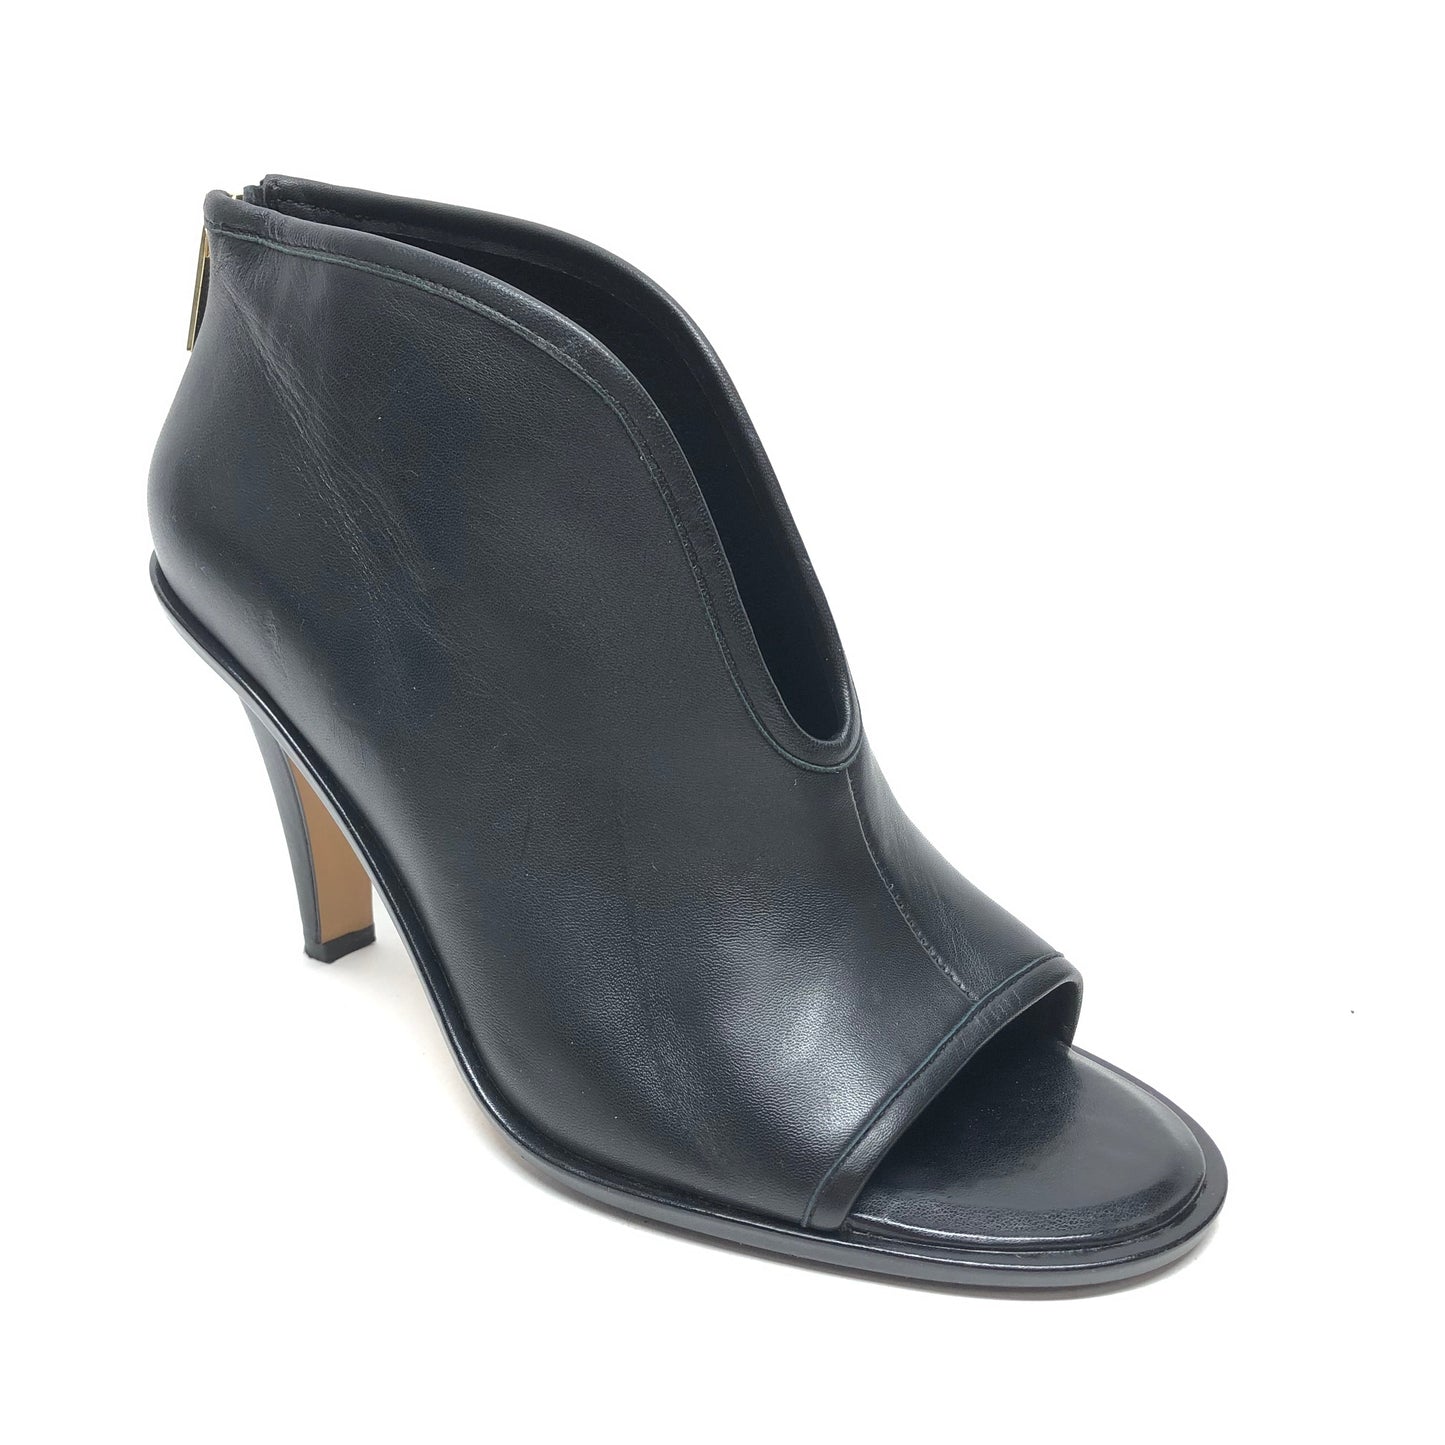 Black Shoes Heels Stiletto Vince Camuto, Size 8.5